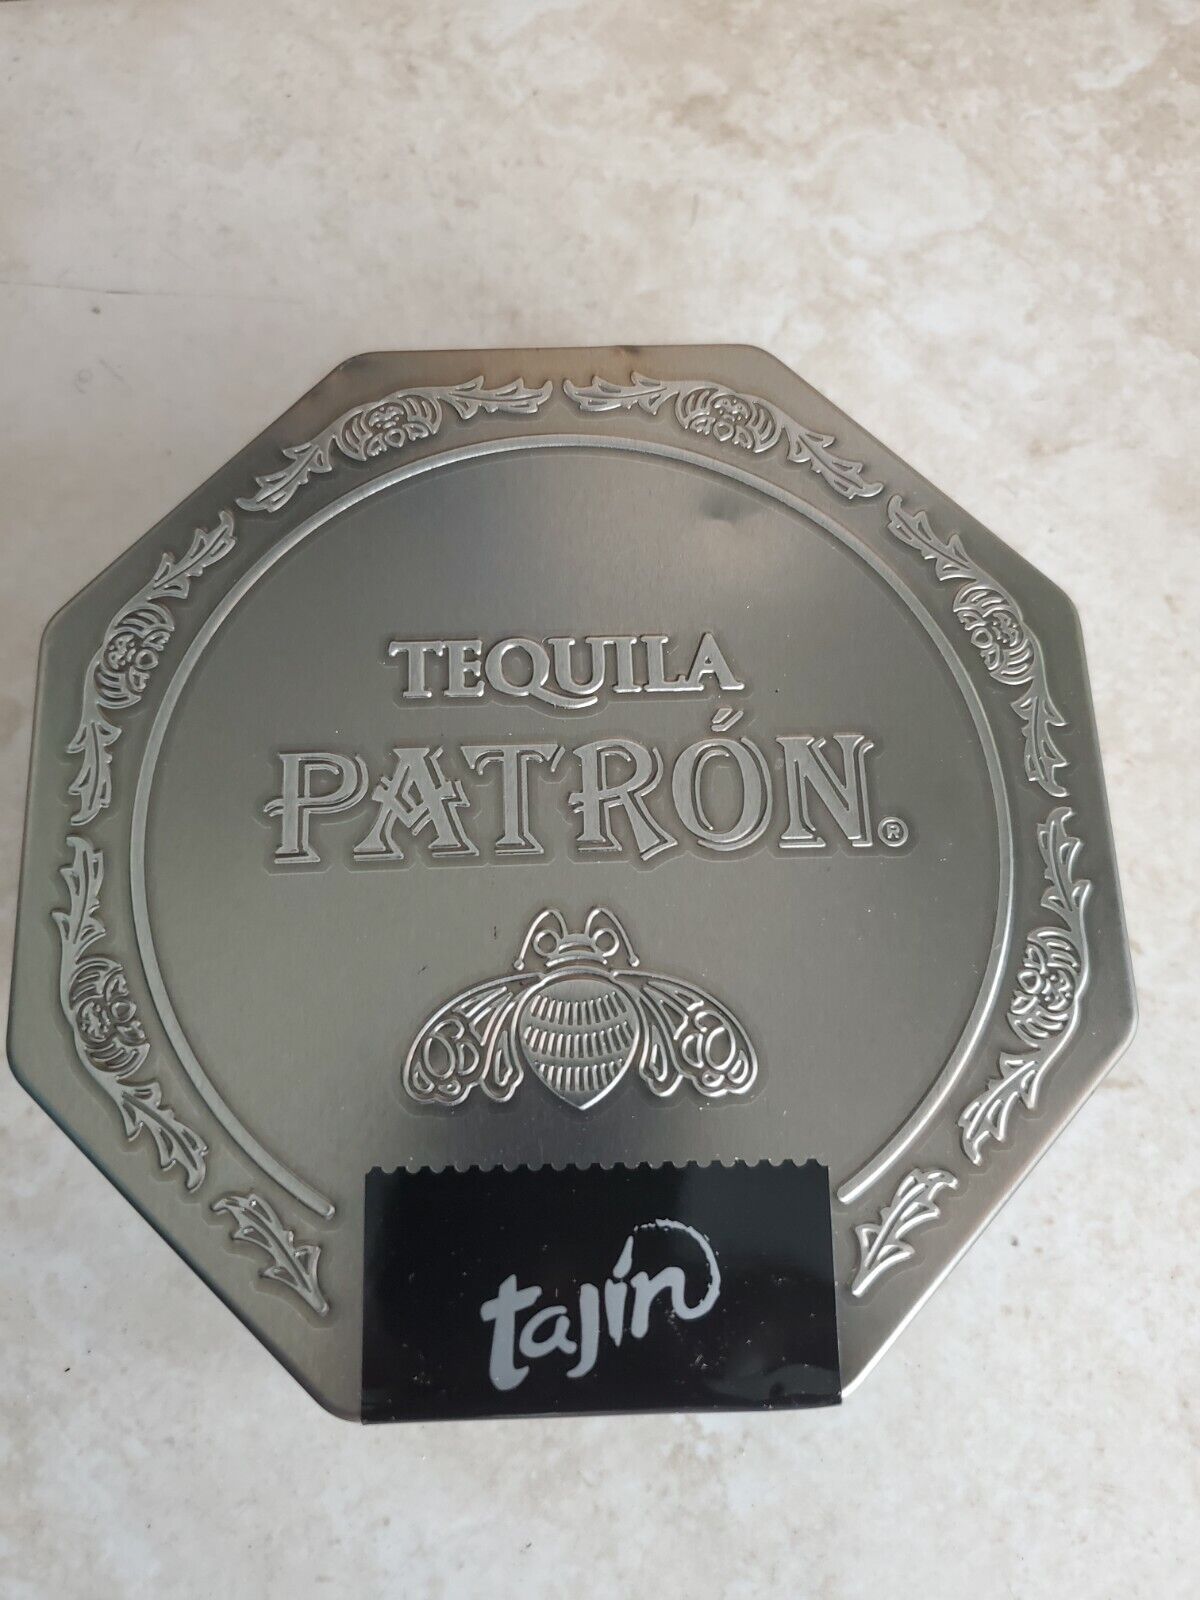 New PATRON Tequila - Cocktail Rimmer - Tarjin Seasoning 4oz SUPER RARE 